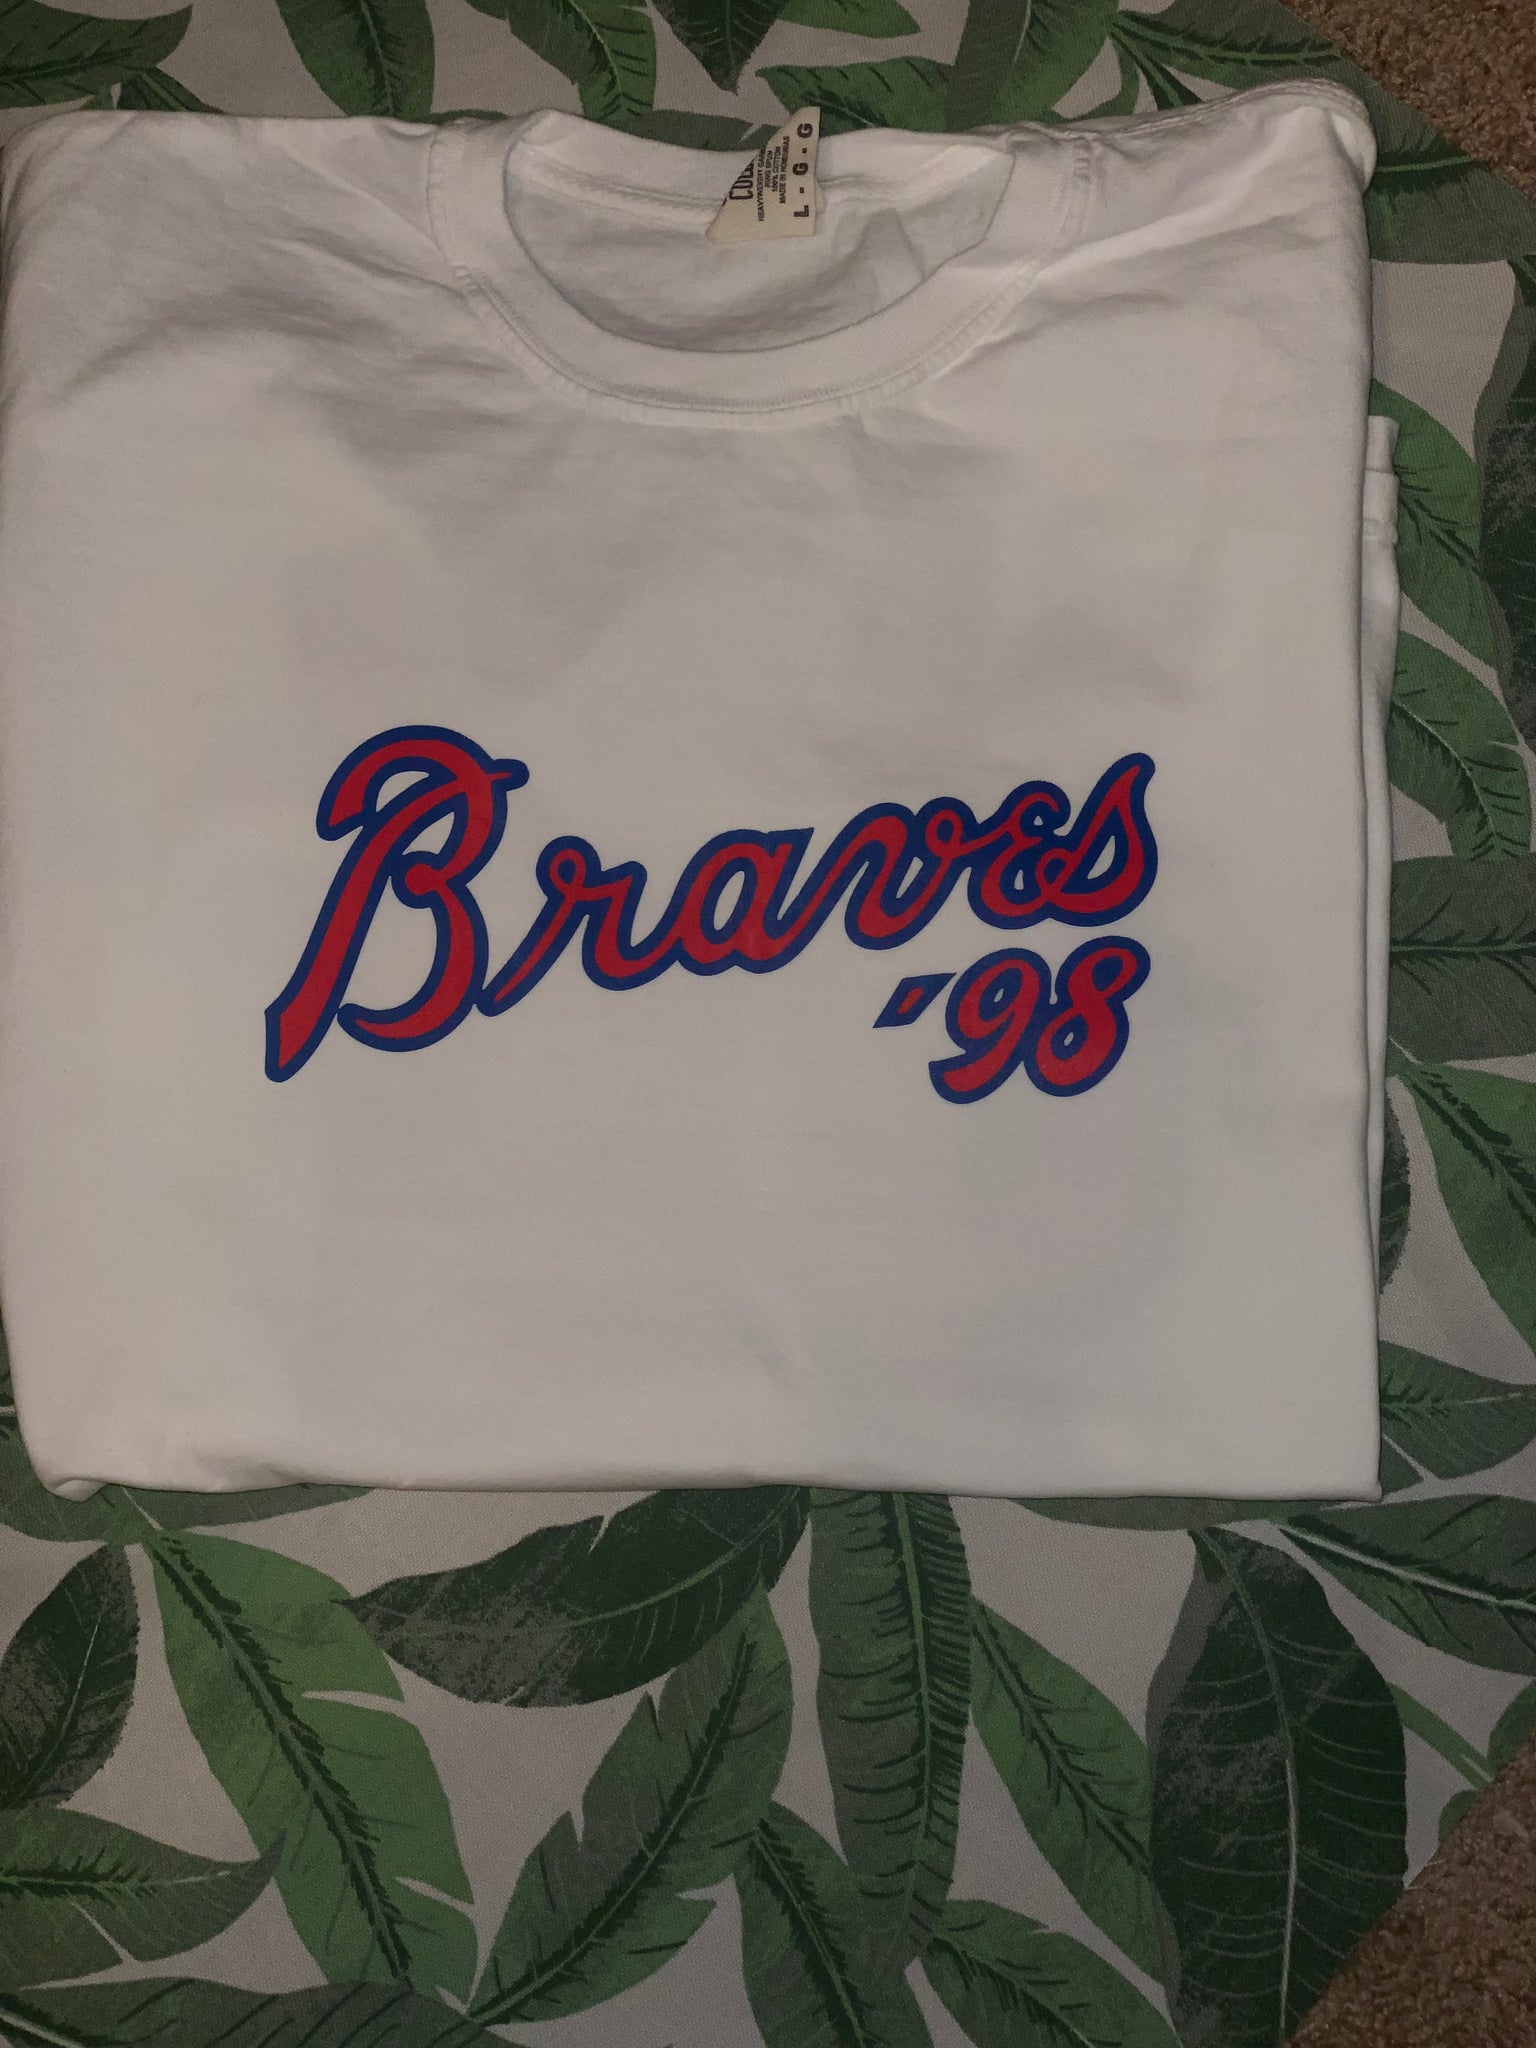 Braves Customized Shirt